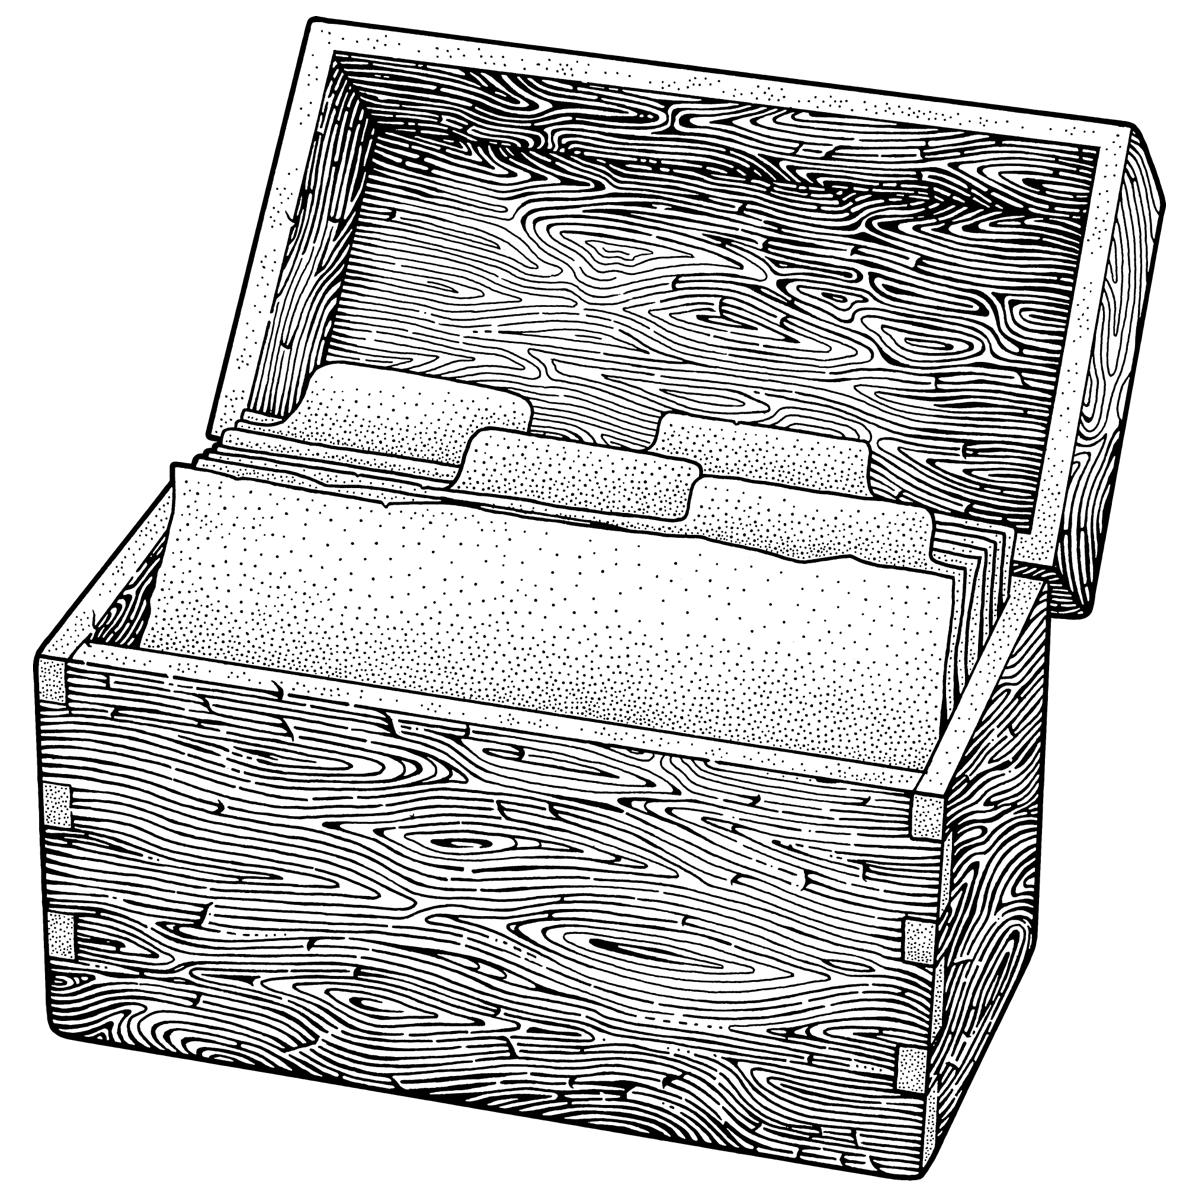 Recipe box illustration